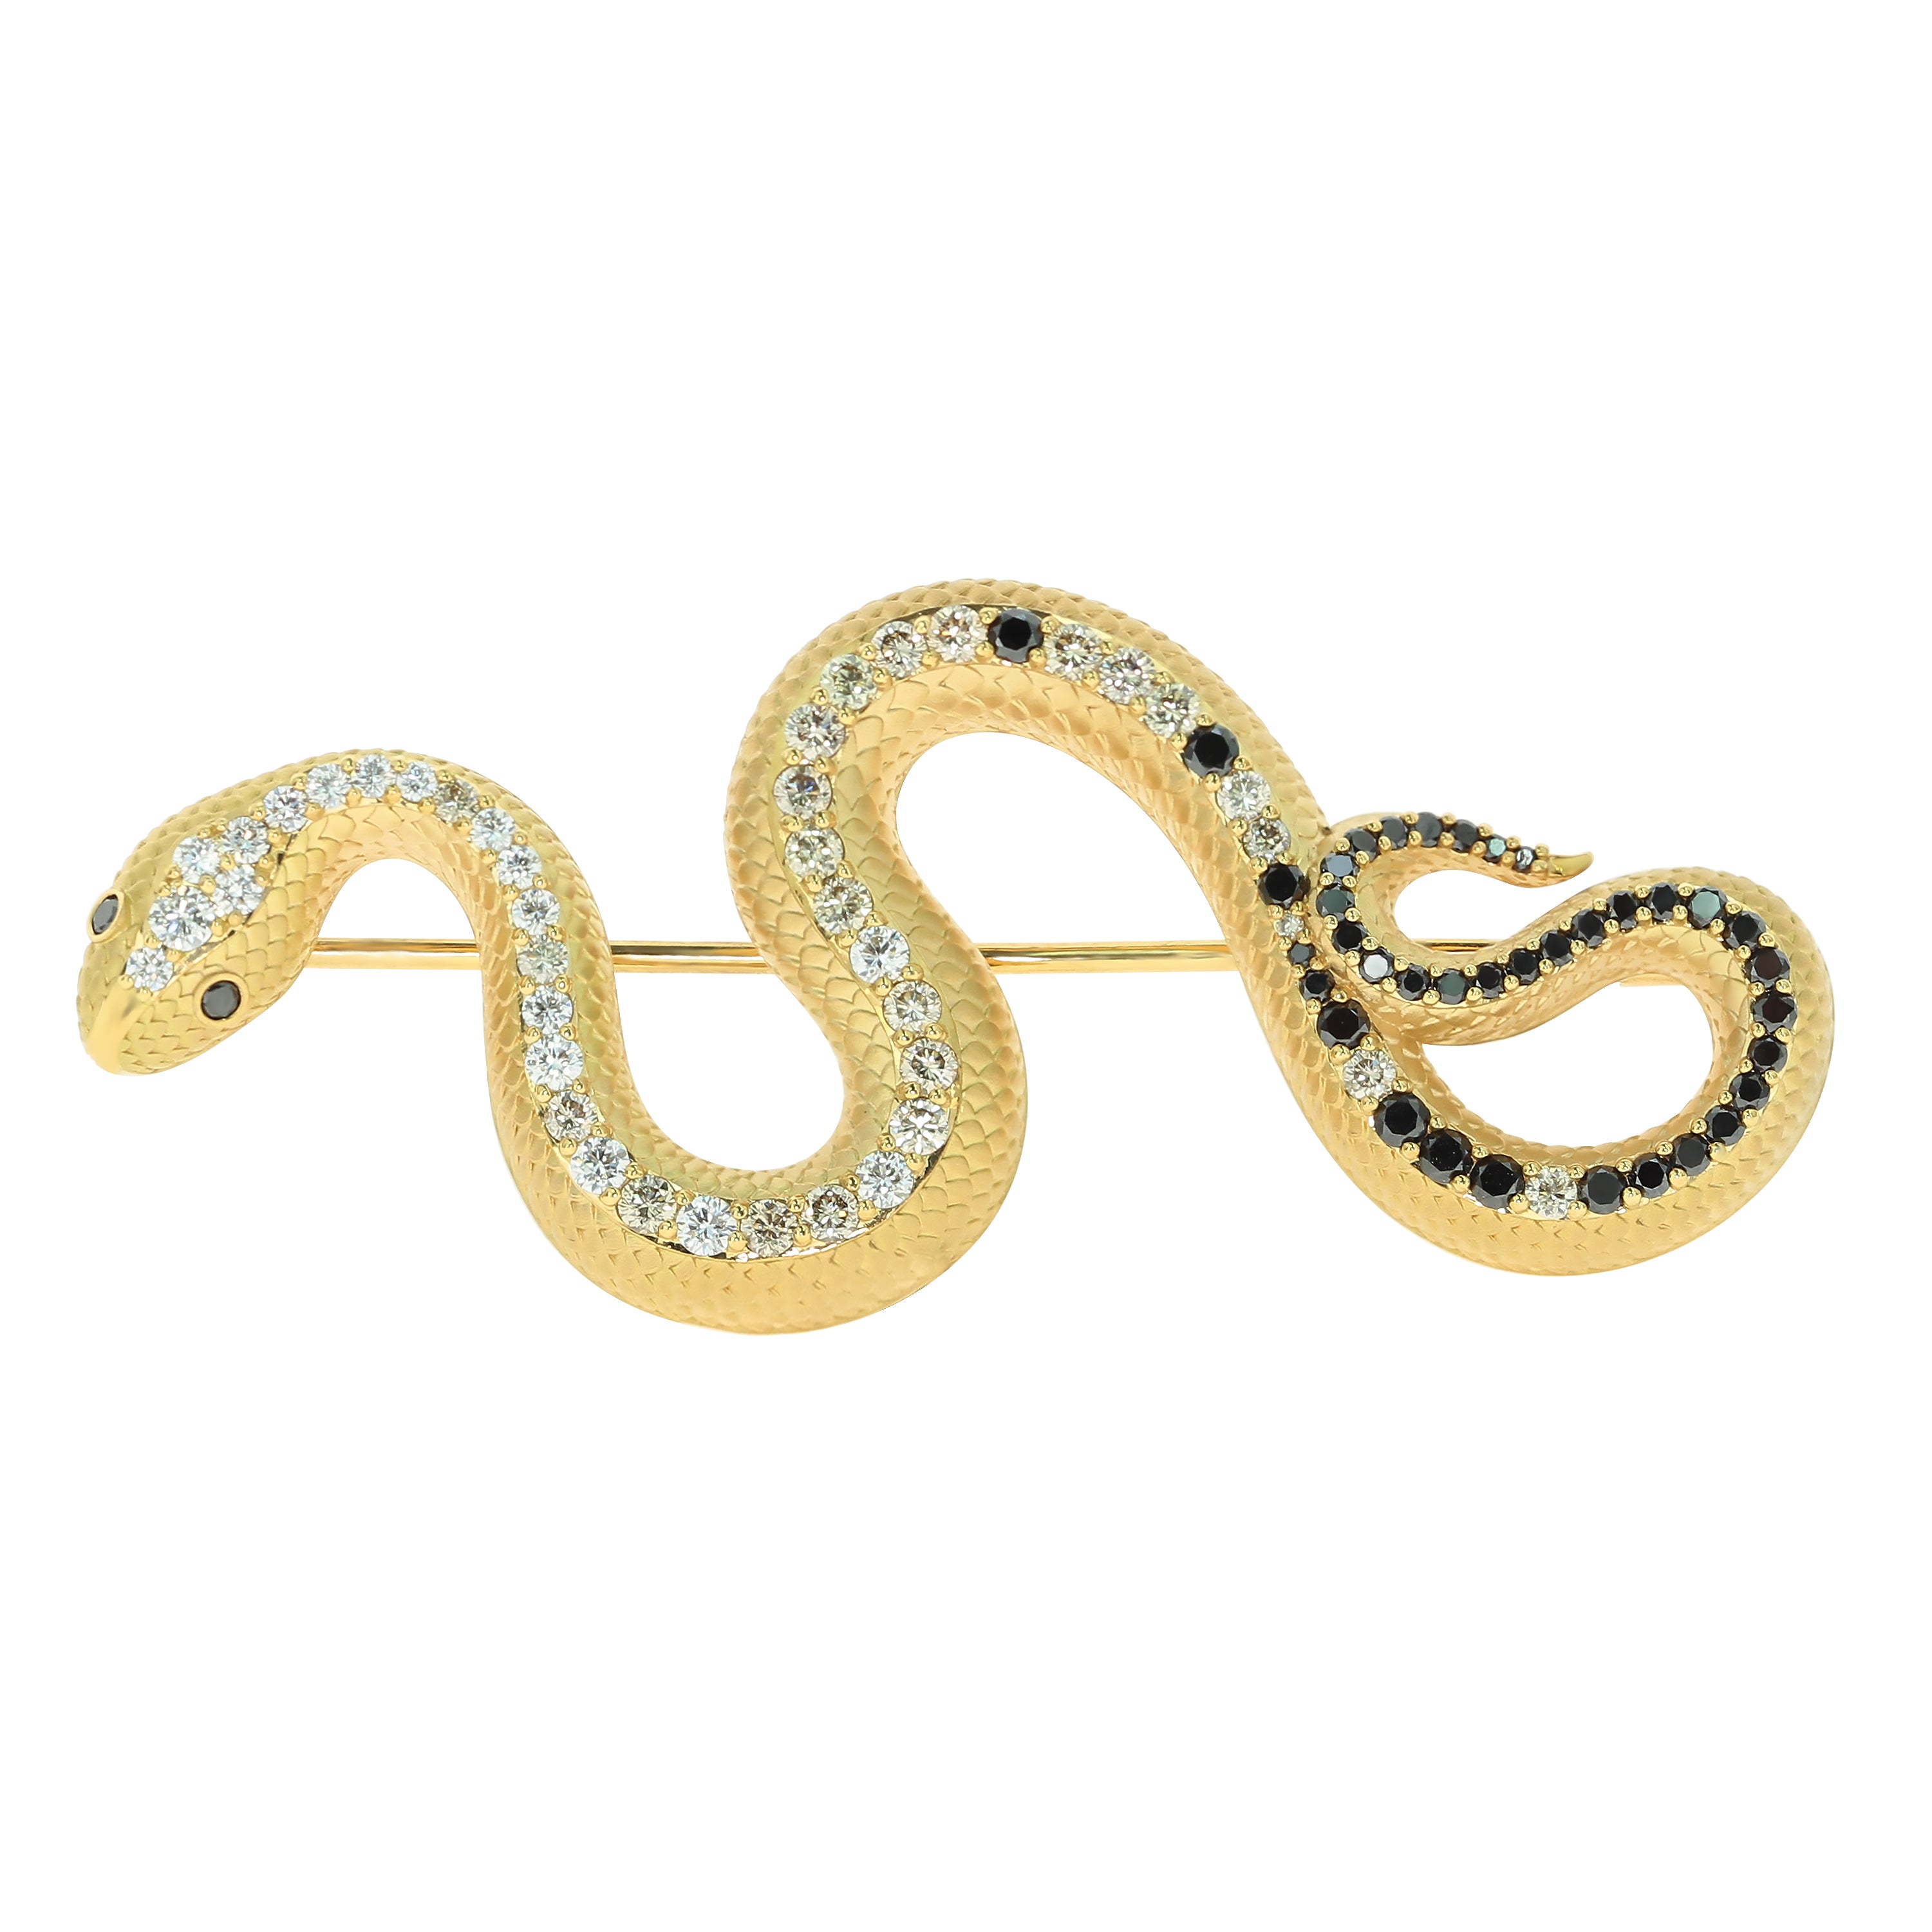 Brs 0188-0, 18K Yellow Gold, Diamonds Snake Brooch